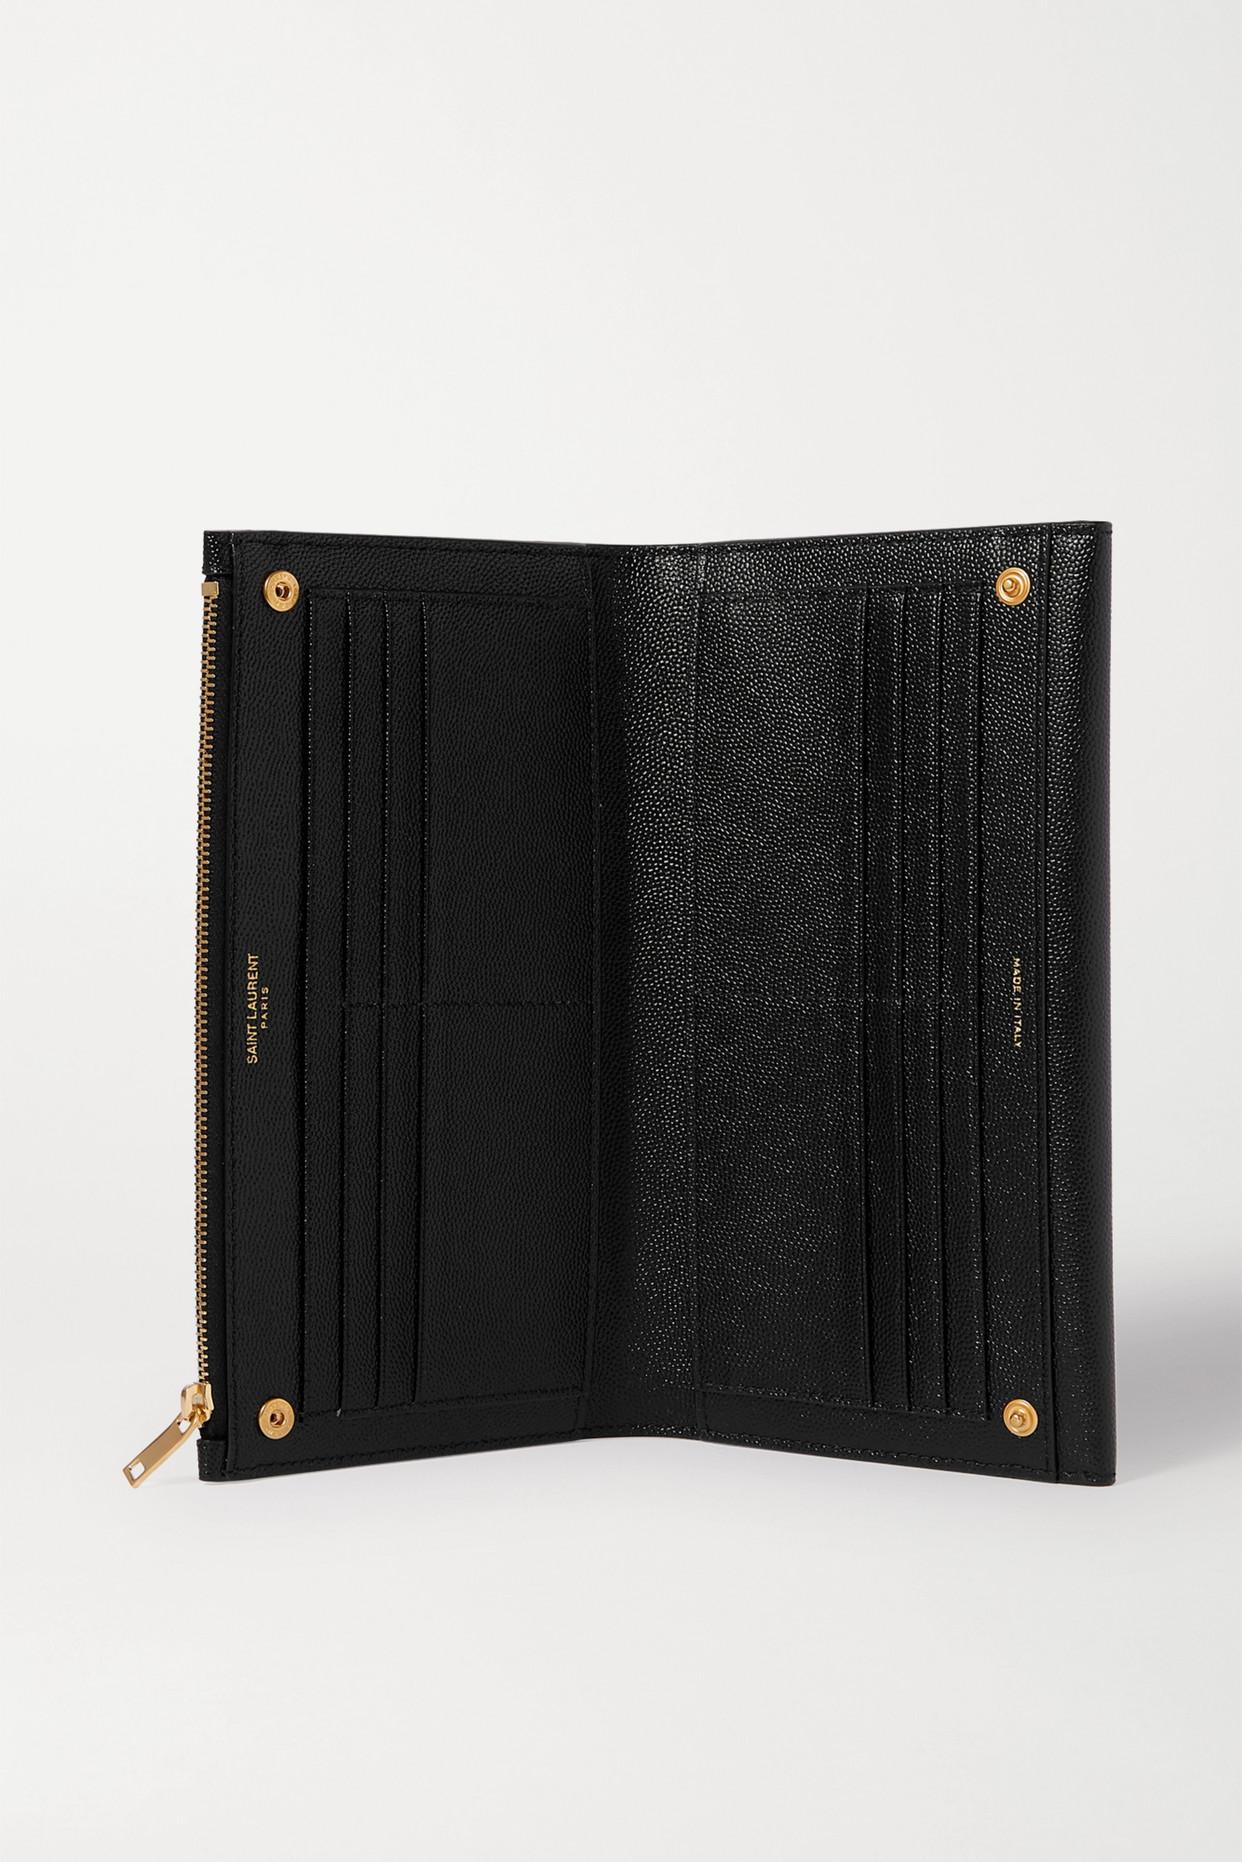 Saint Laurent Uptown Textured-leather Wallet in Black | Lyst